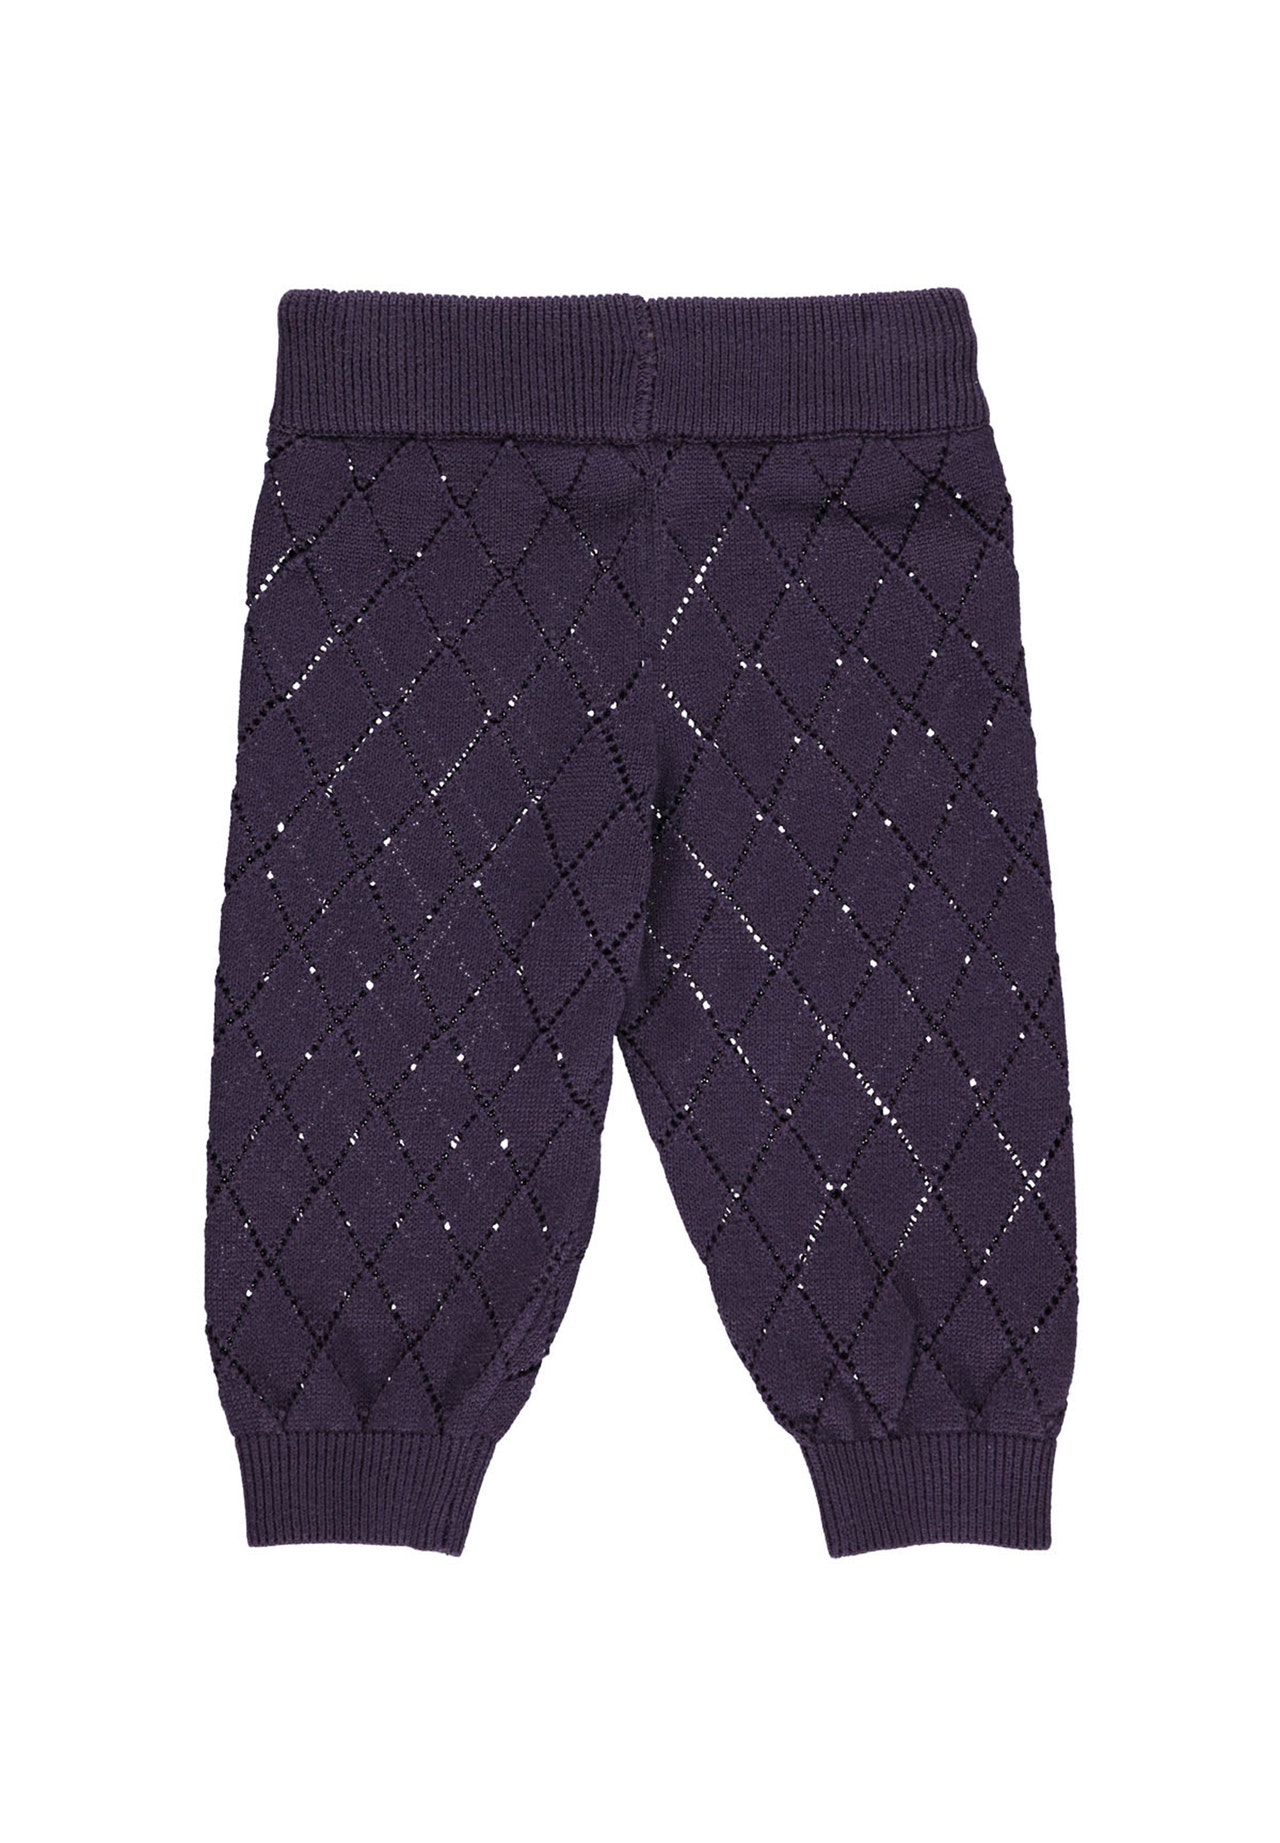 MAMA.LICIOUS müsli Knit trousers -Dark Lilac - 1539003000